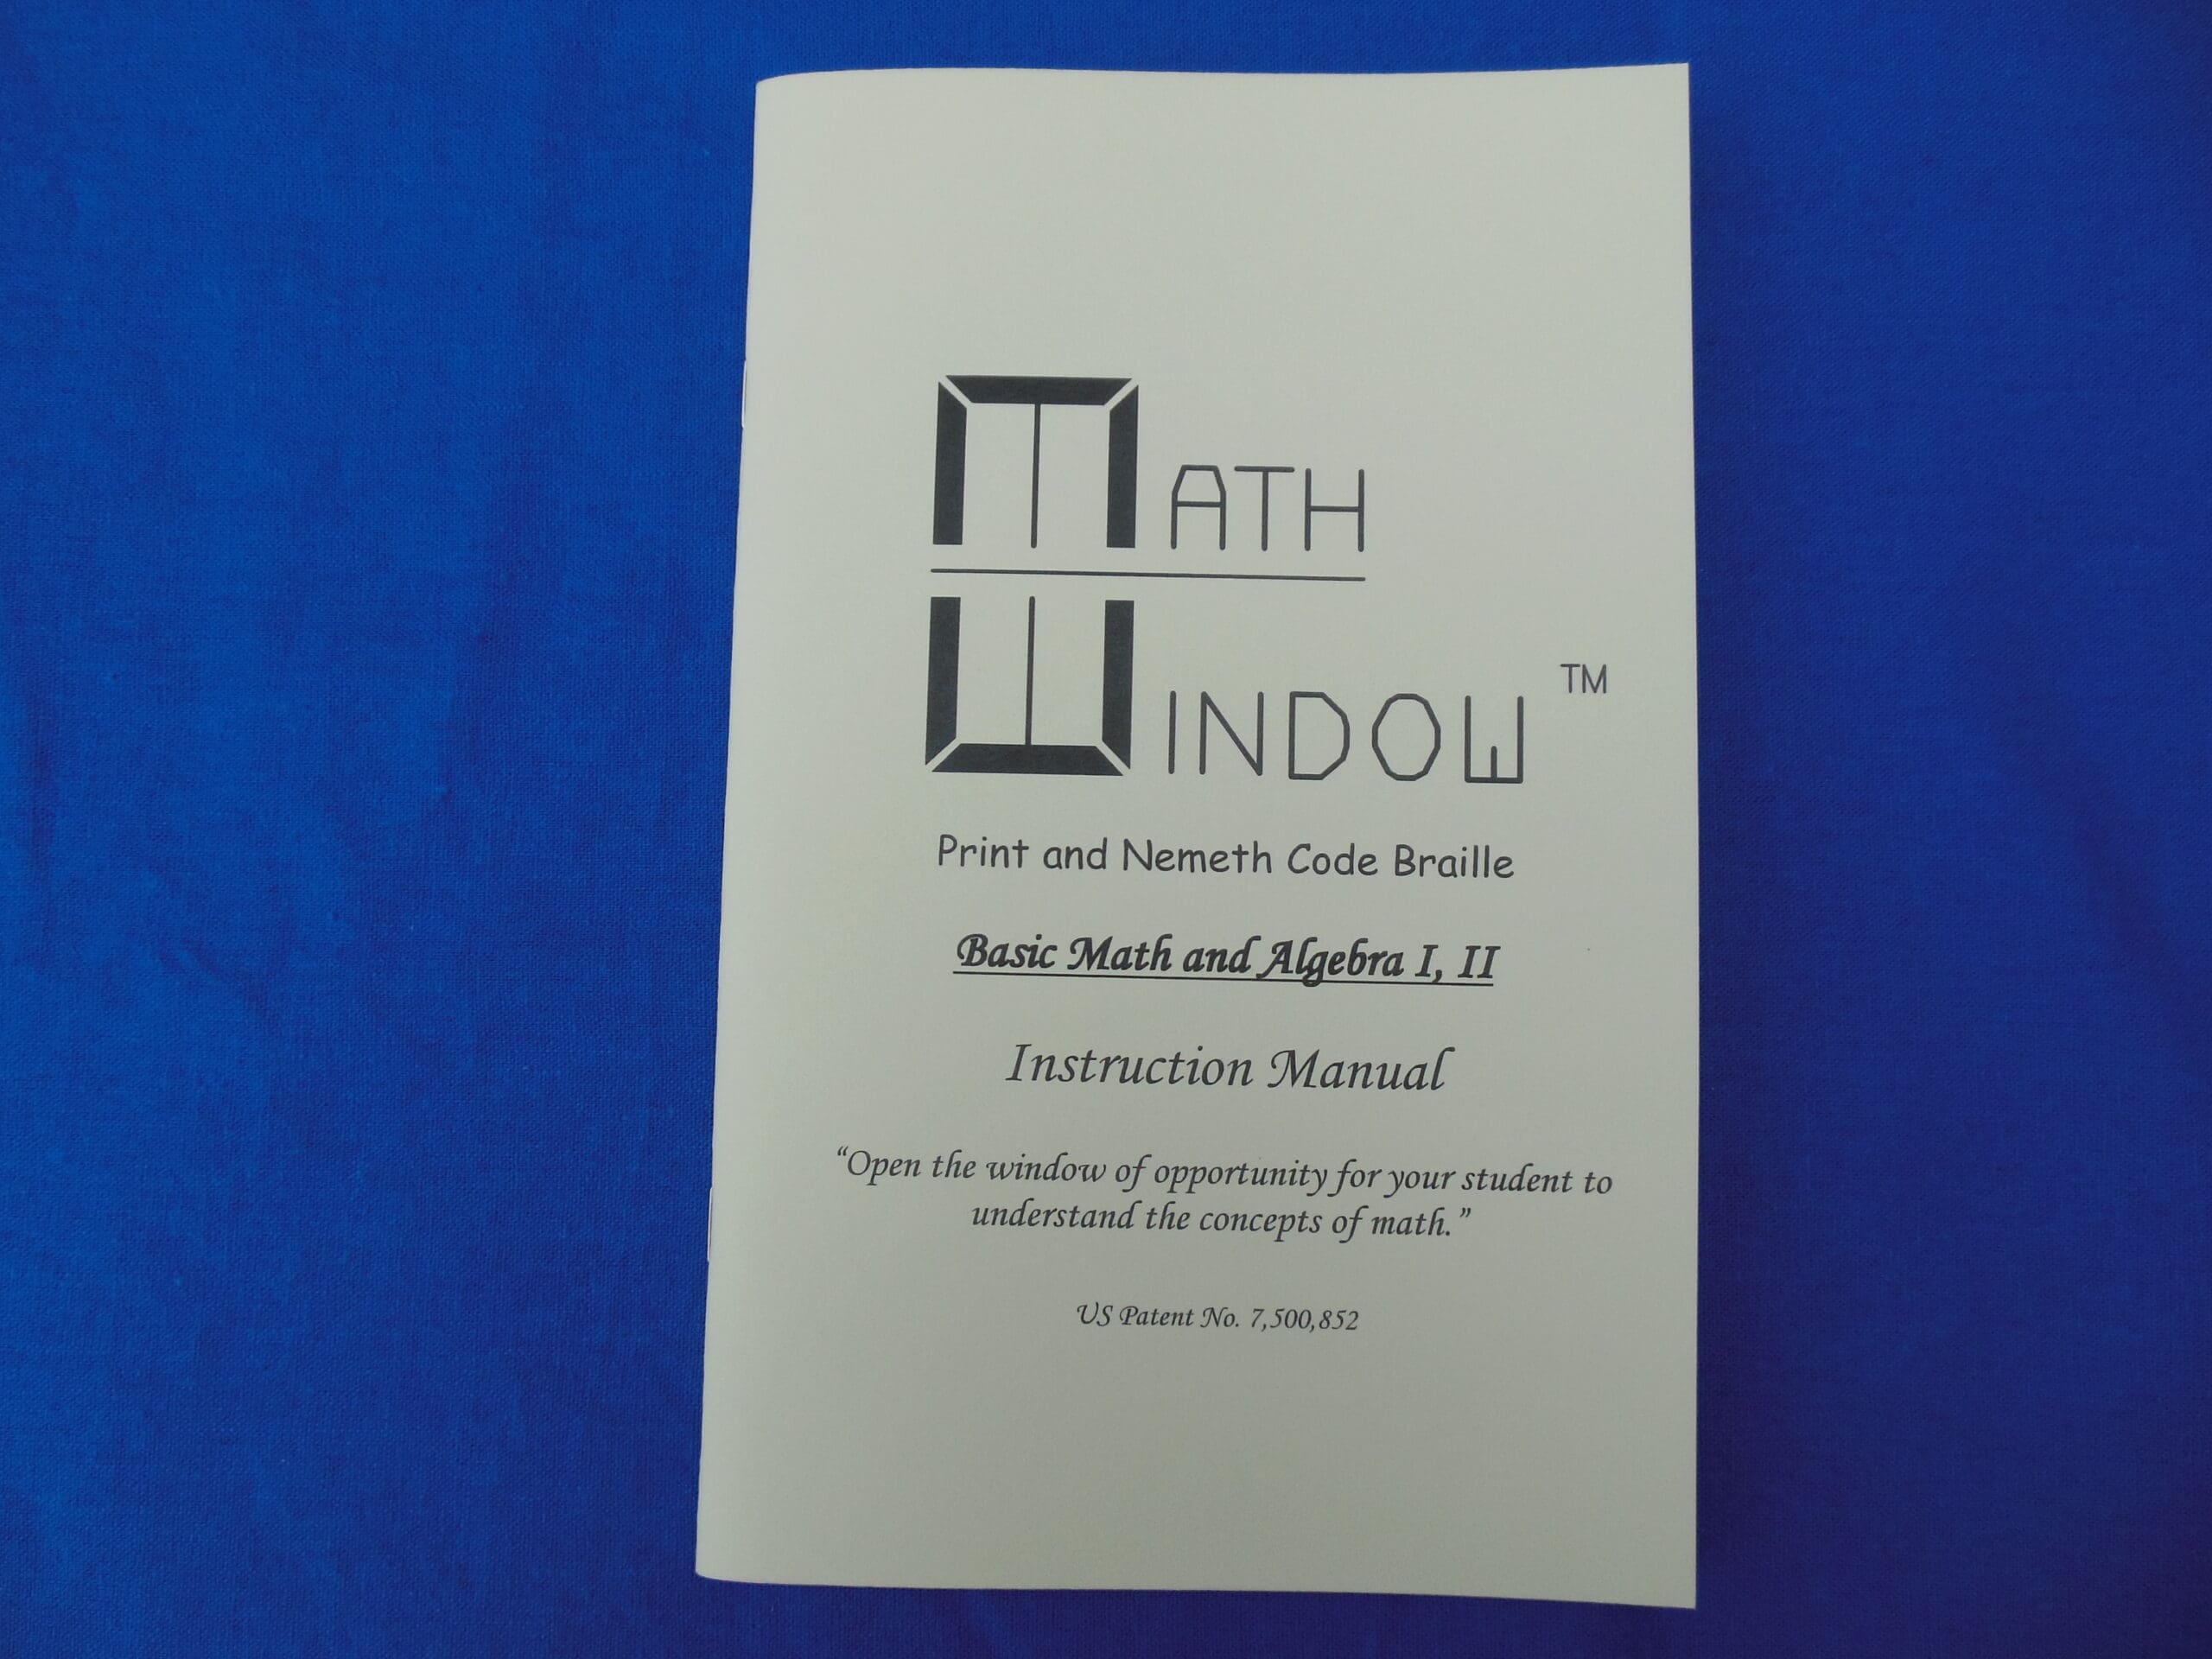 Print and Nemeth Code Braille Basic Math and Algebra I, II, Instruction Manual